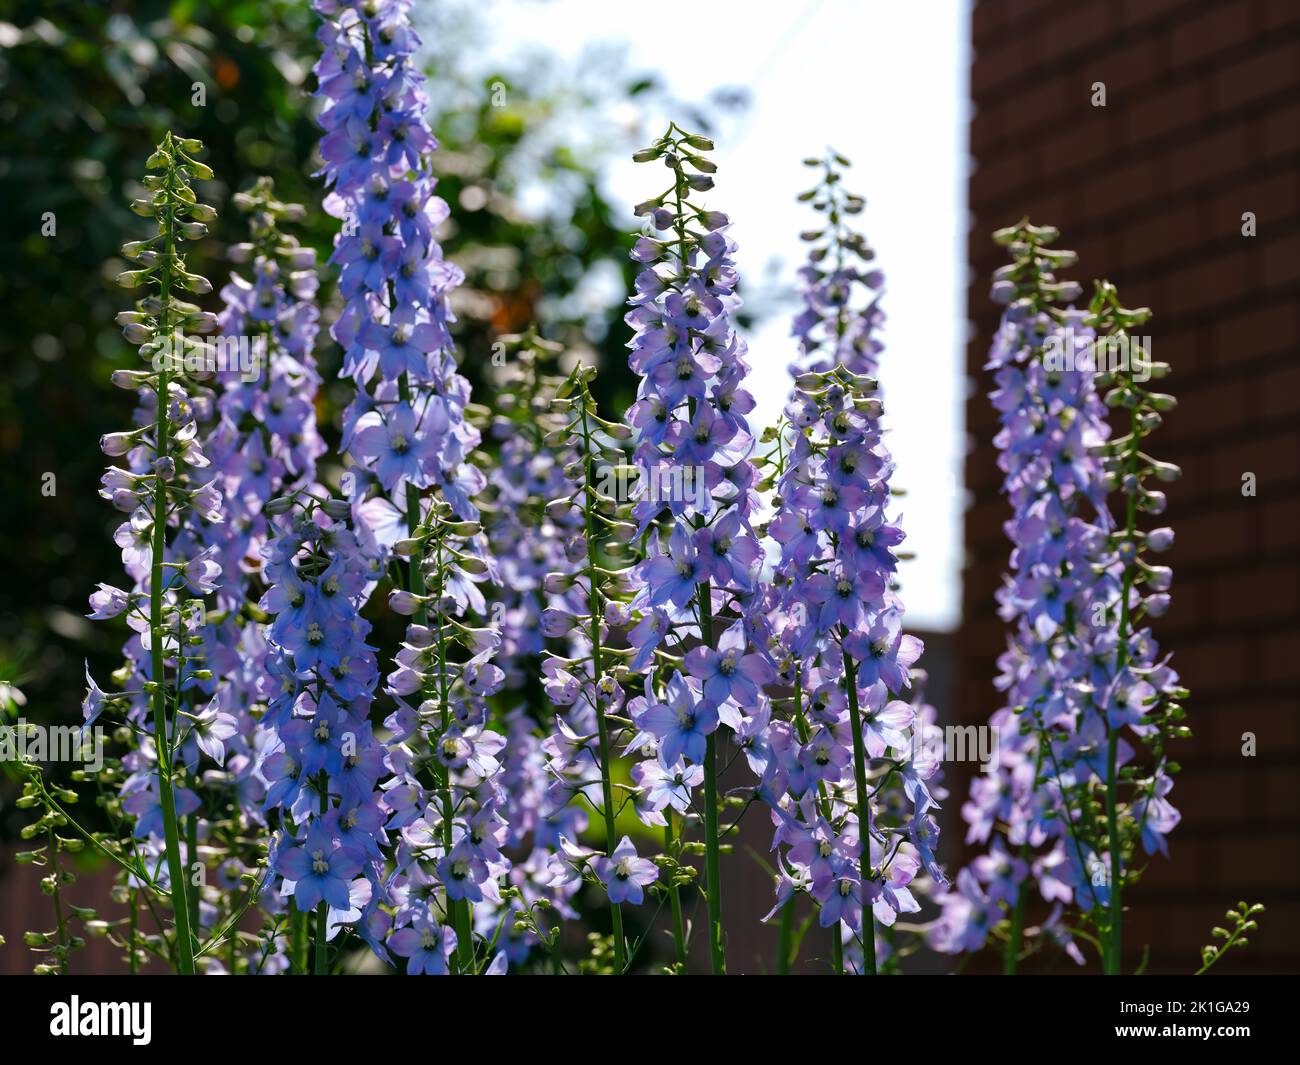 Some blue Delphinium flowering in the garden. Stock Photo